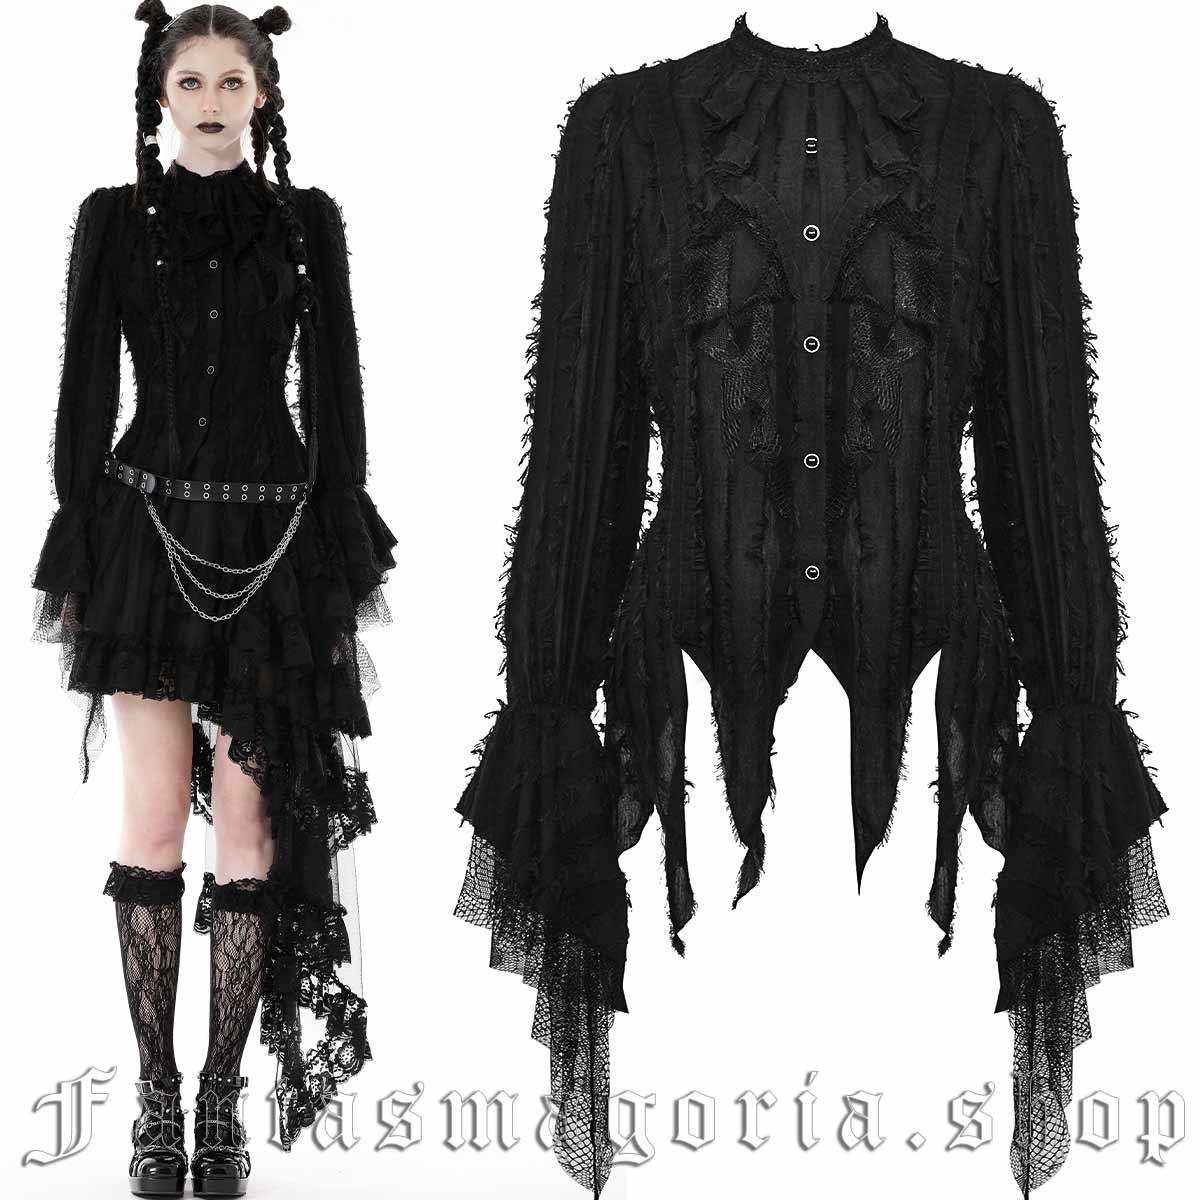 Women's Gothic black distressed texture long-sleeve hanky hem jabot style neckline shirt. - Dark in Love - IW098